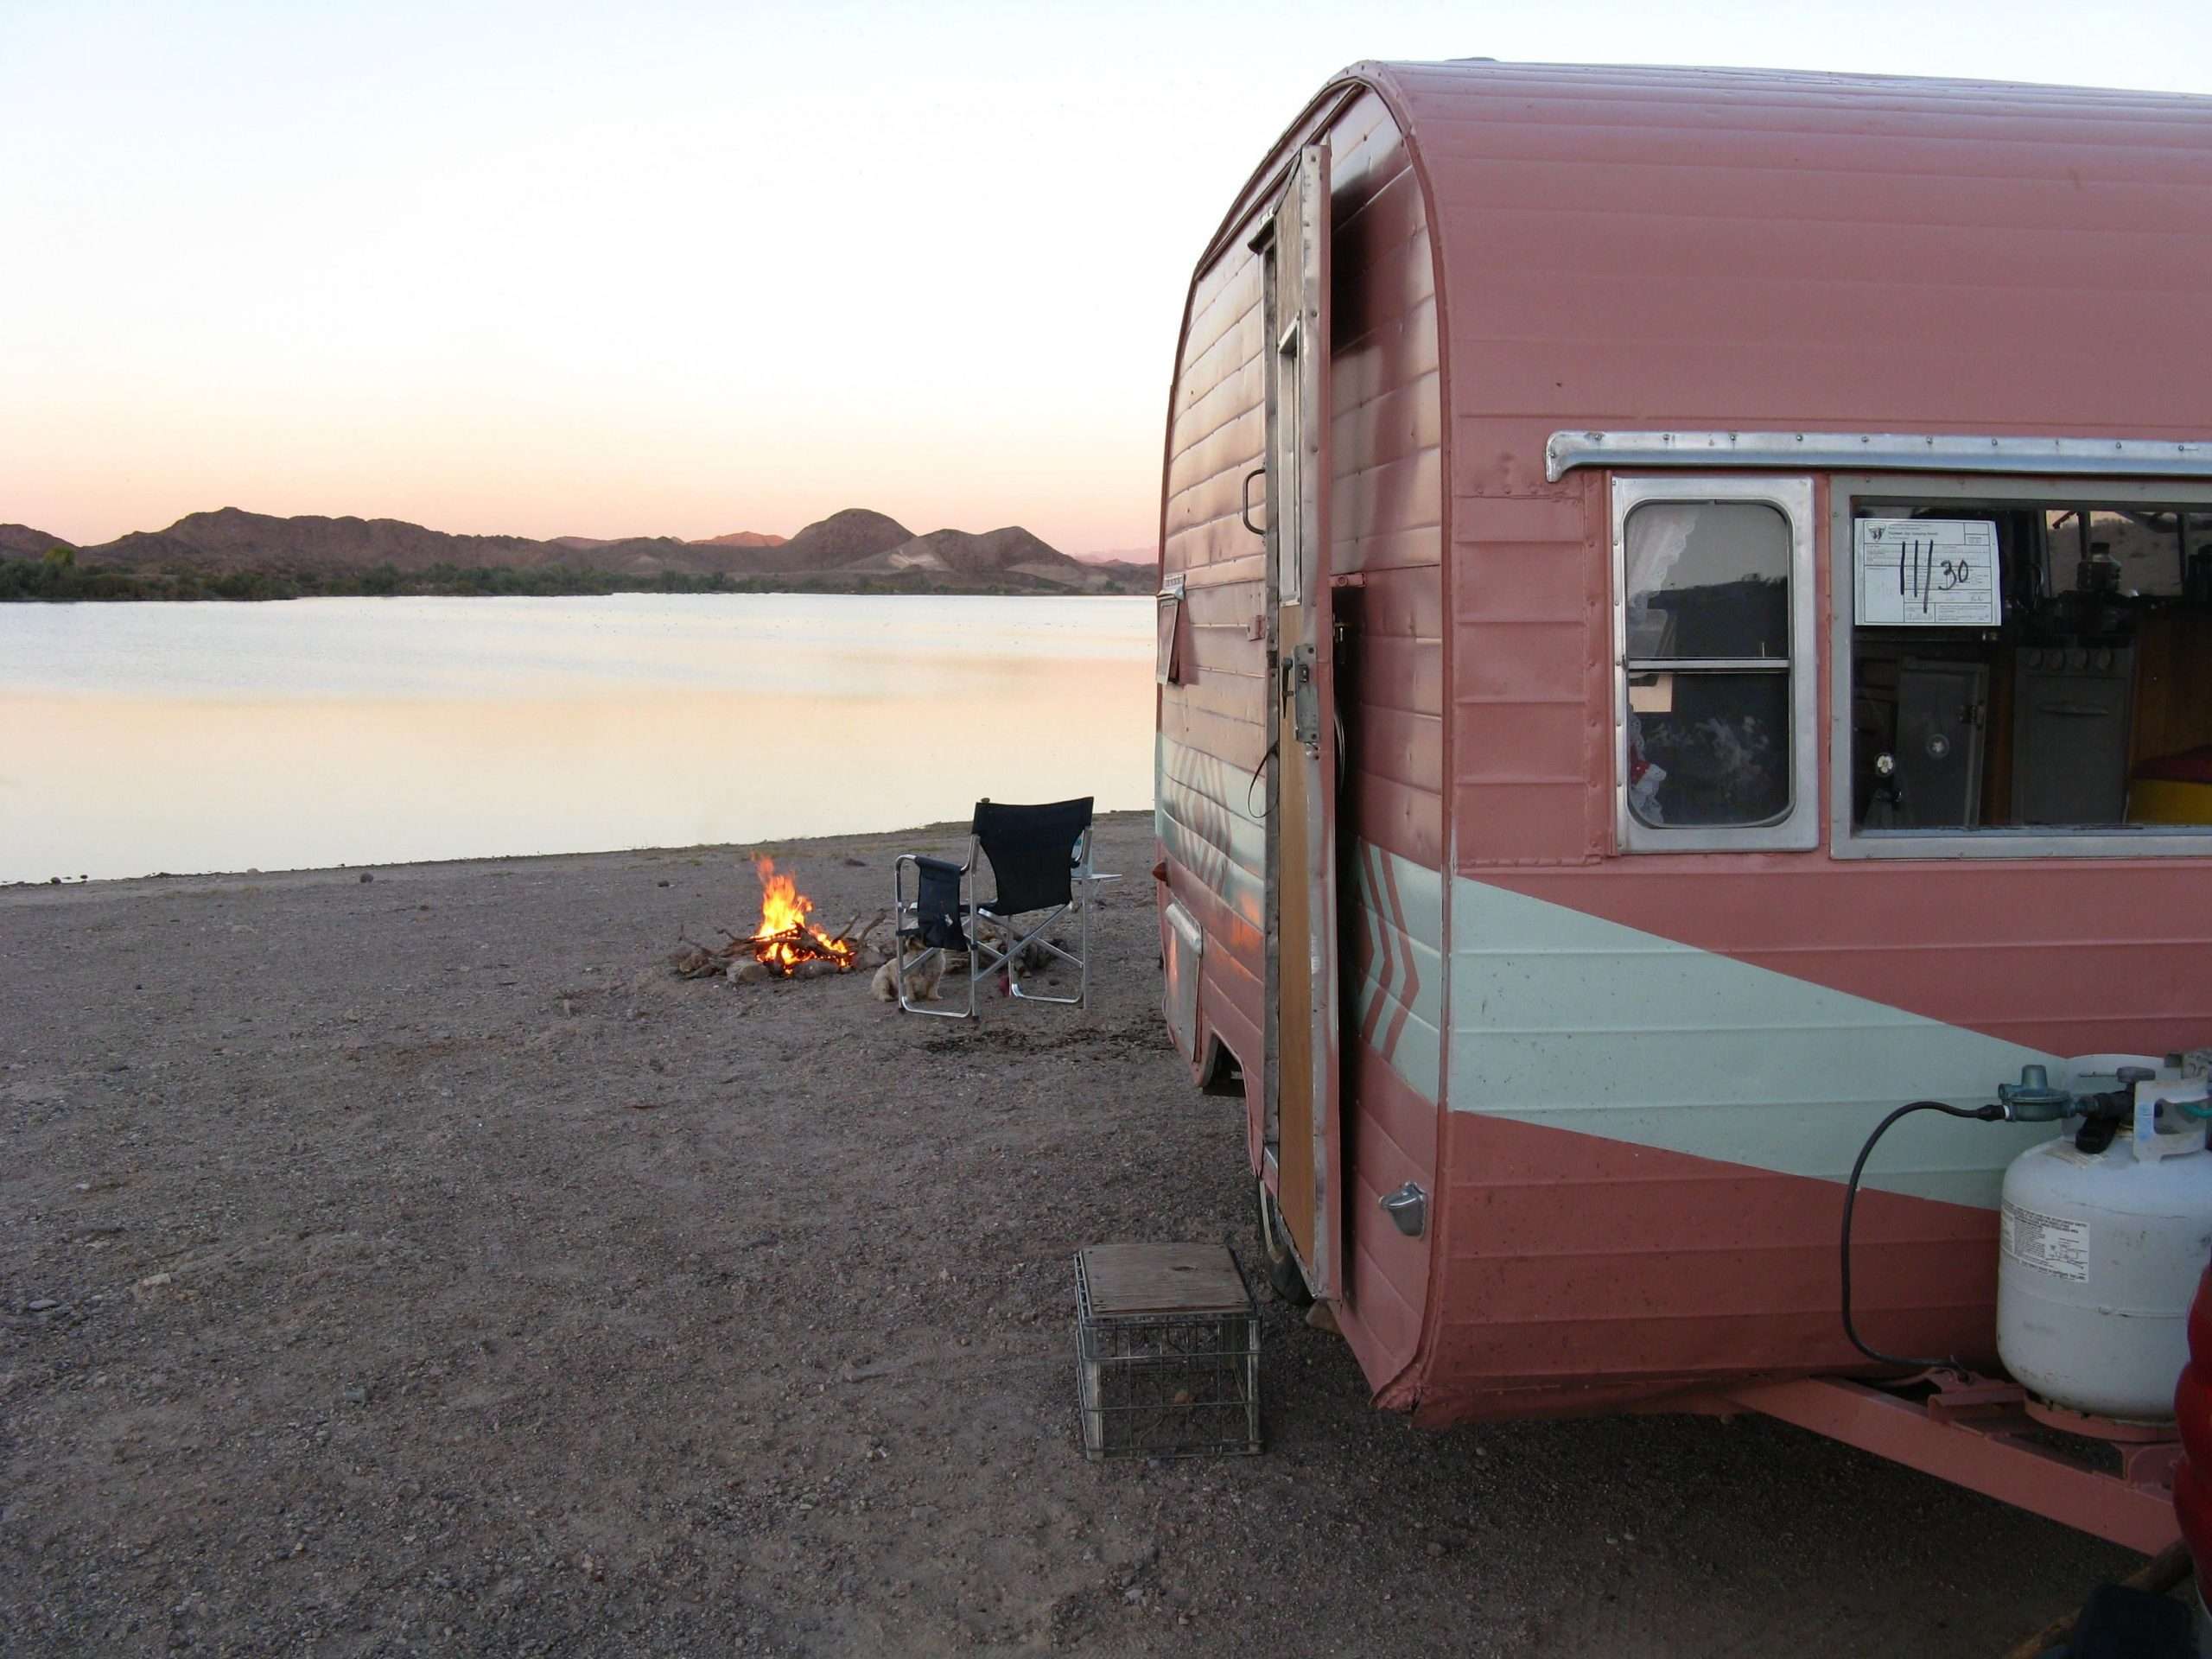 camping at Senator Wash near Yuma az new years 2013 ...